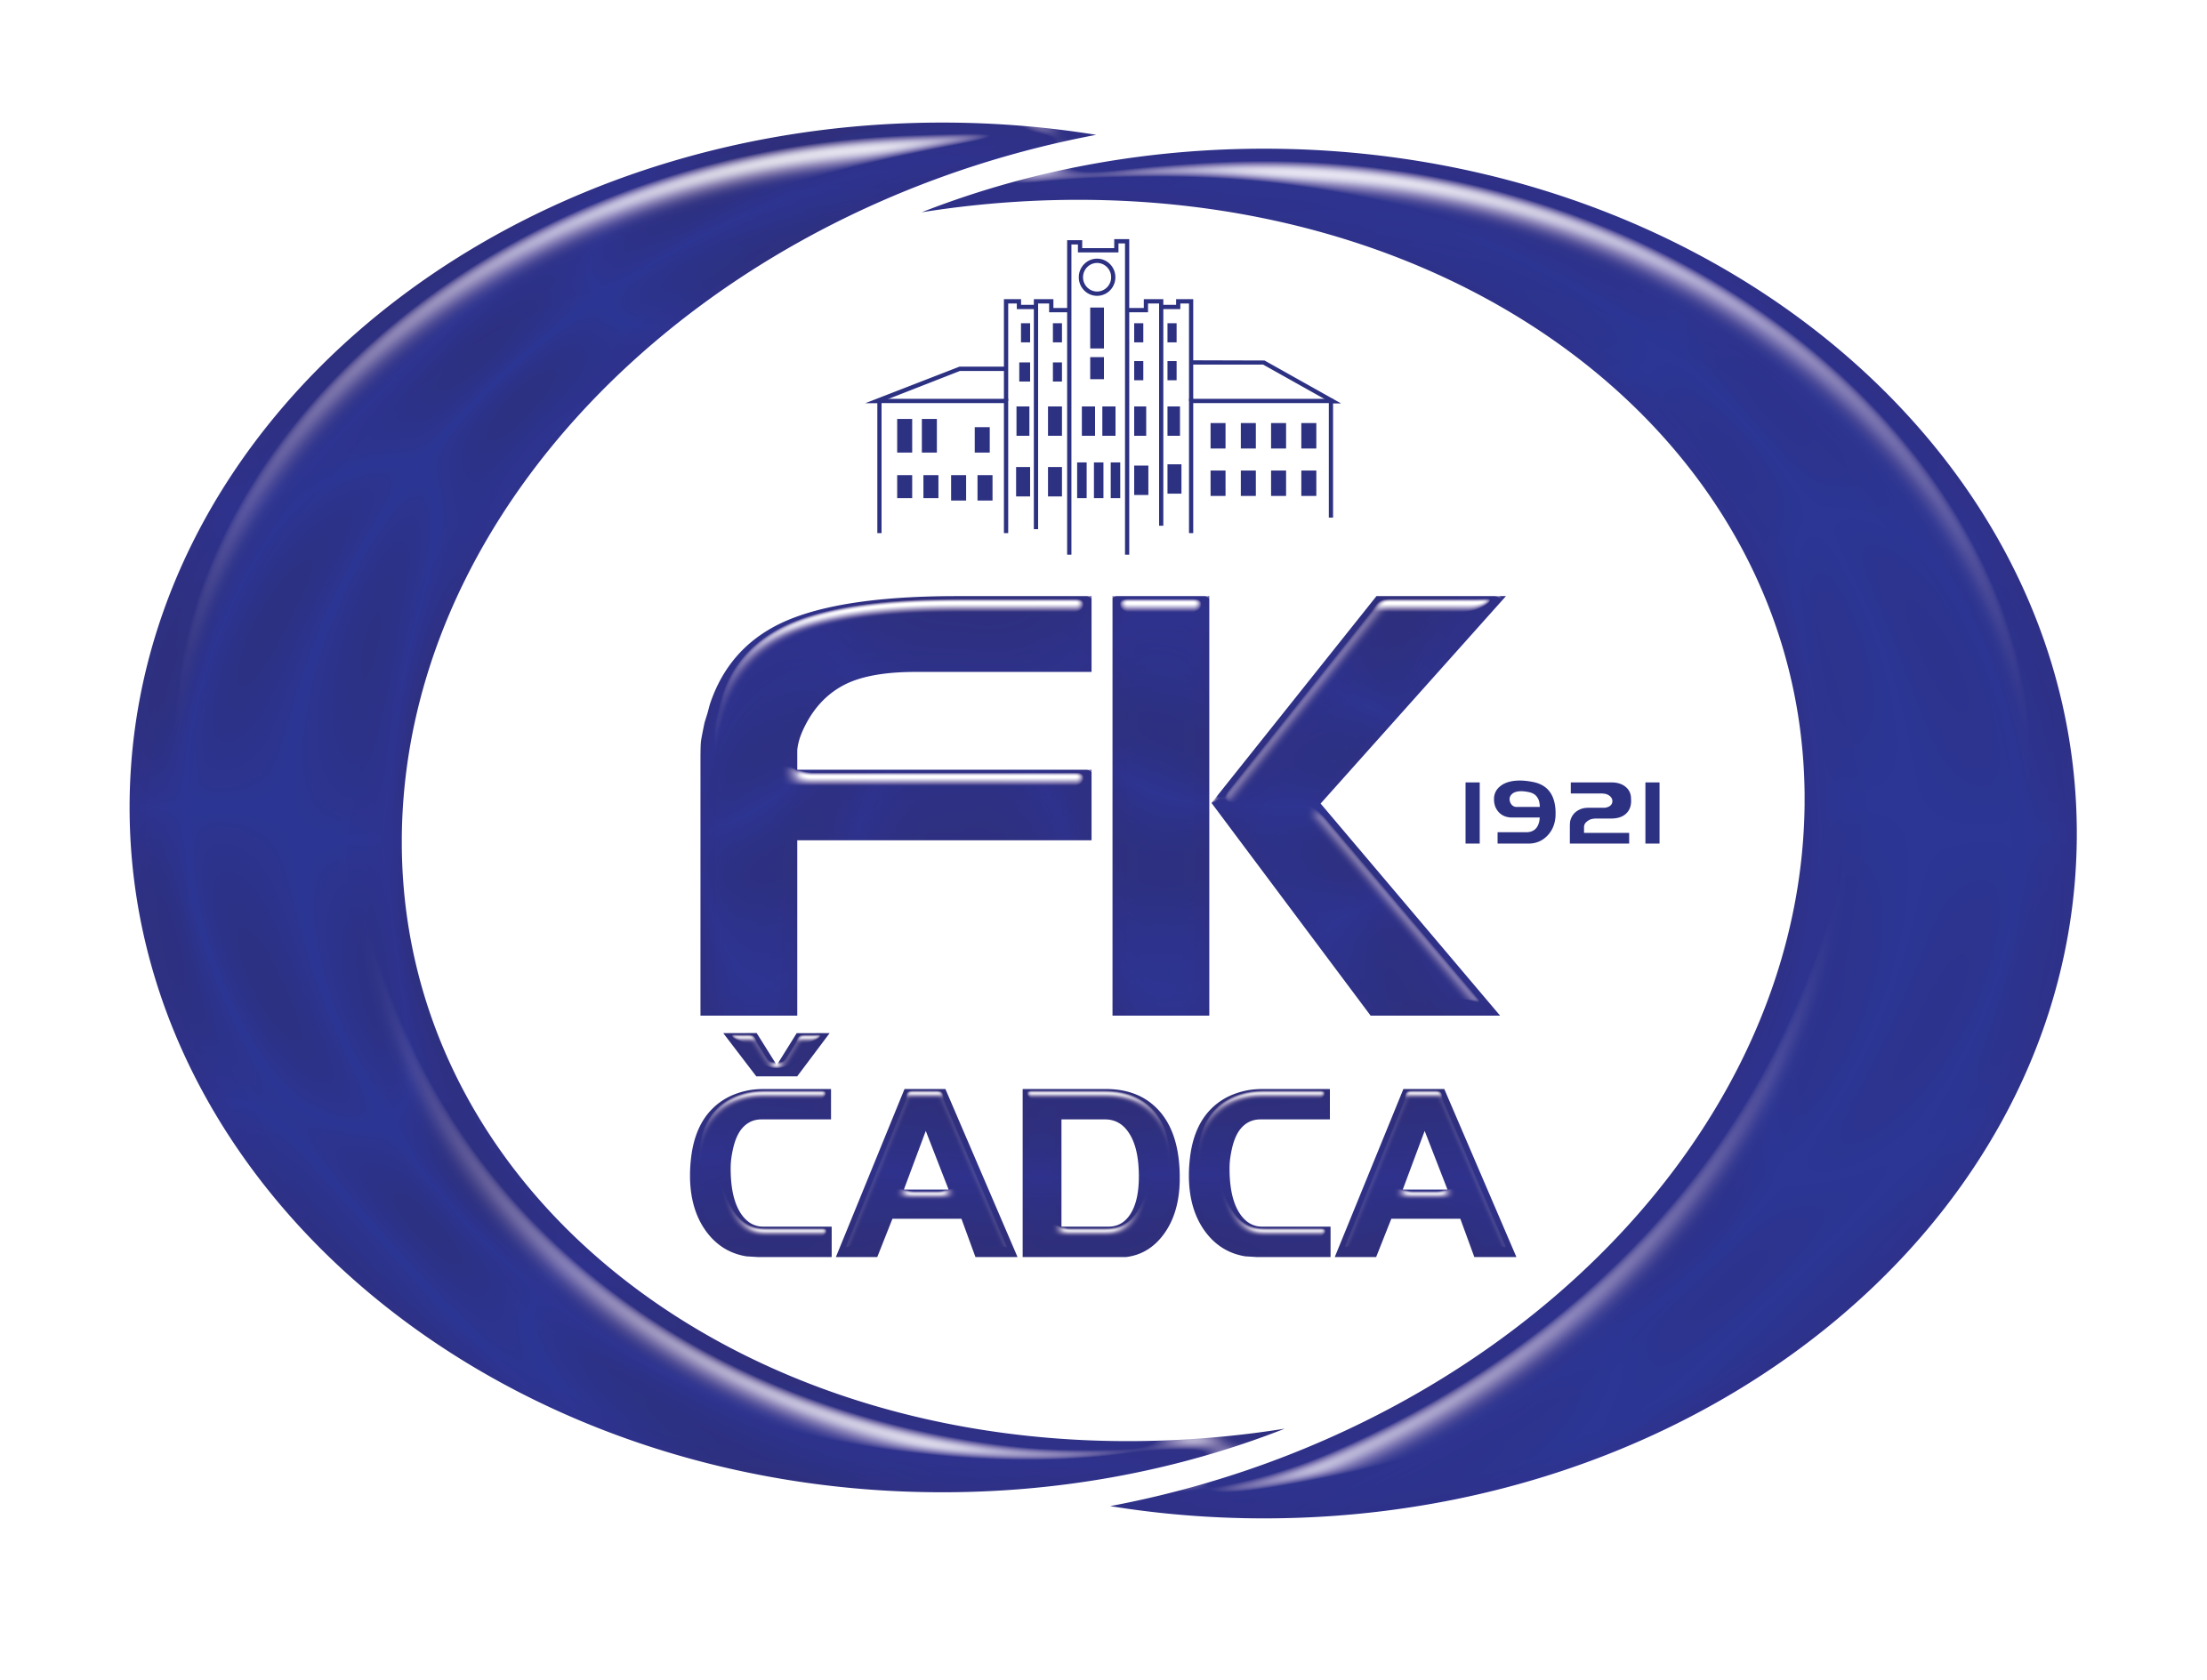 FK Čadca